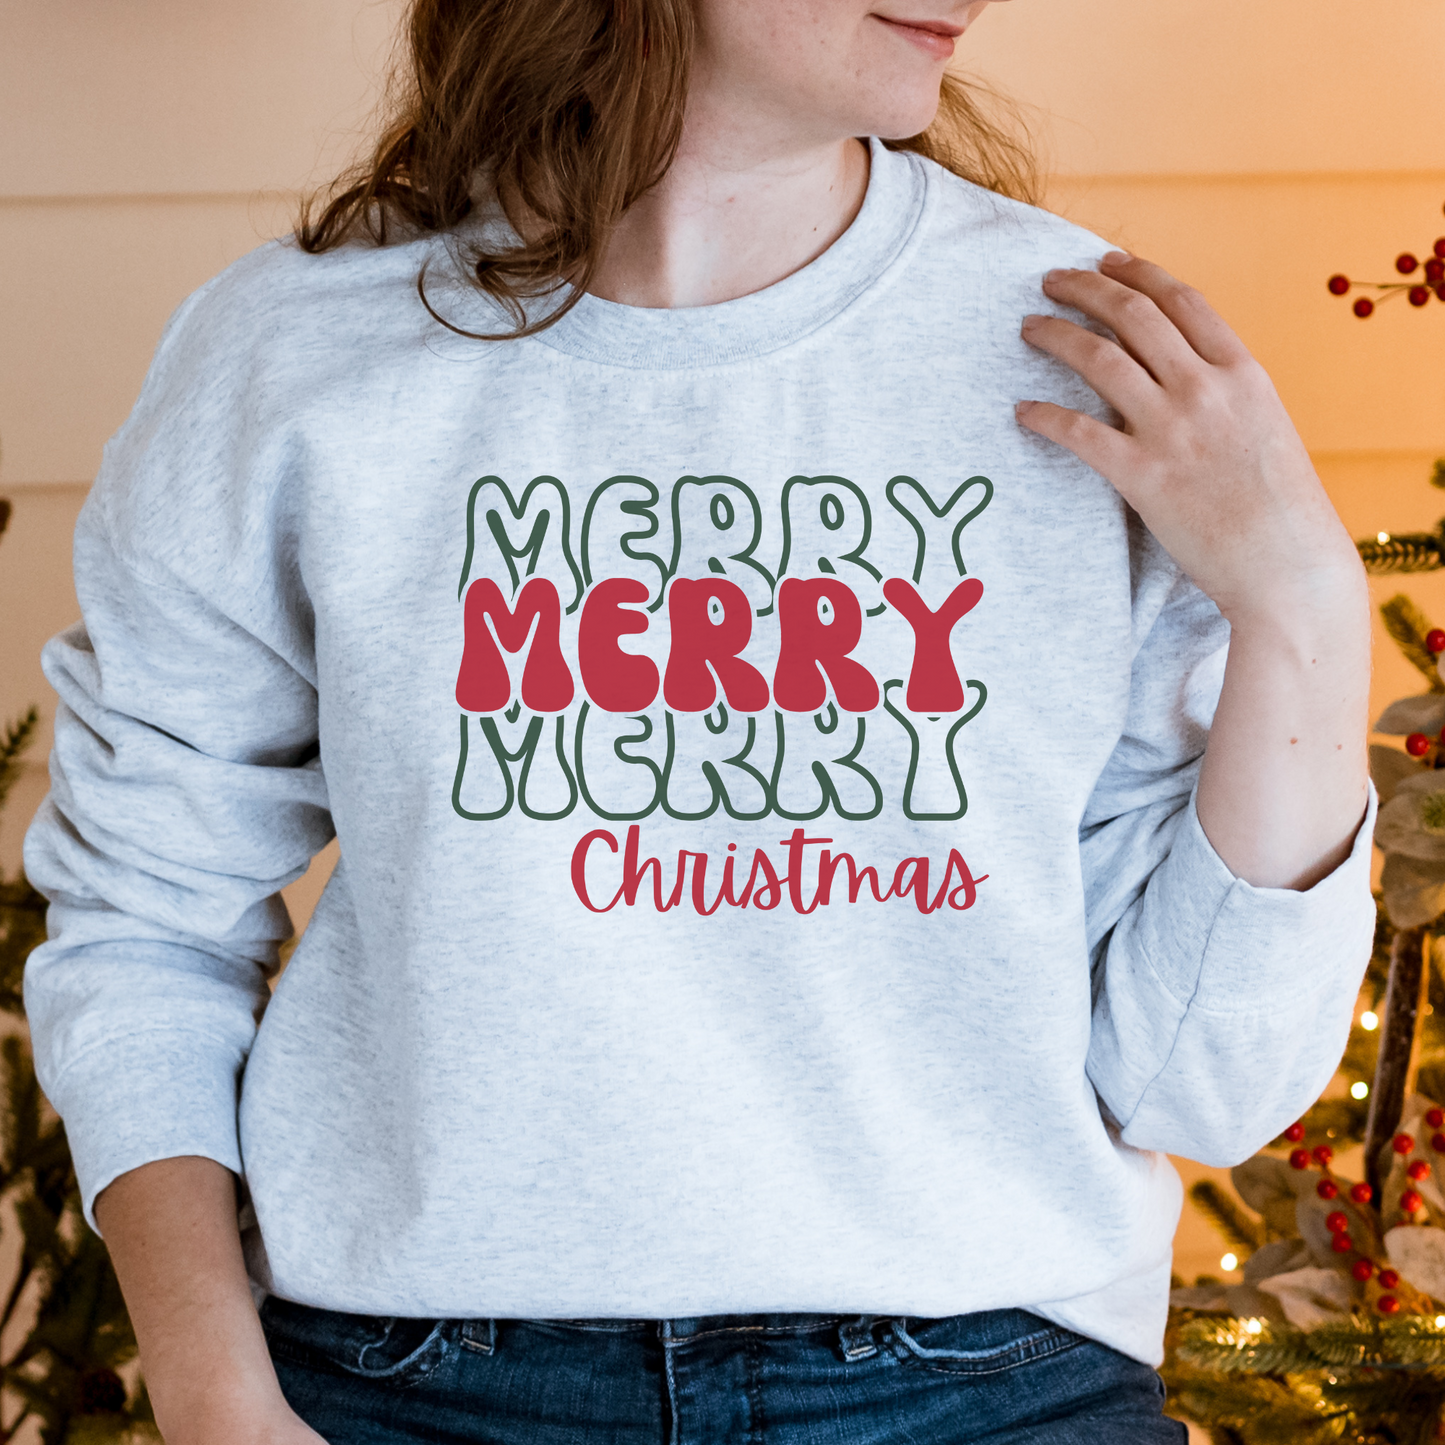 Merry Merry Merry Christmas Sweatshirt